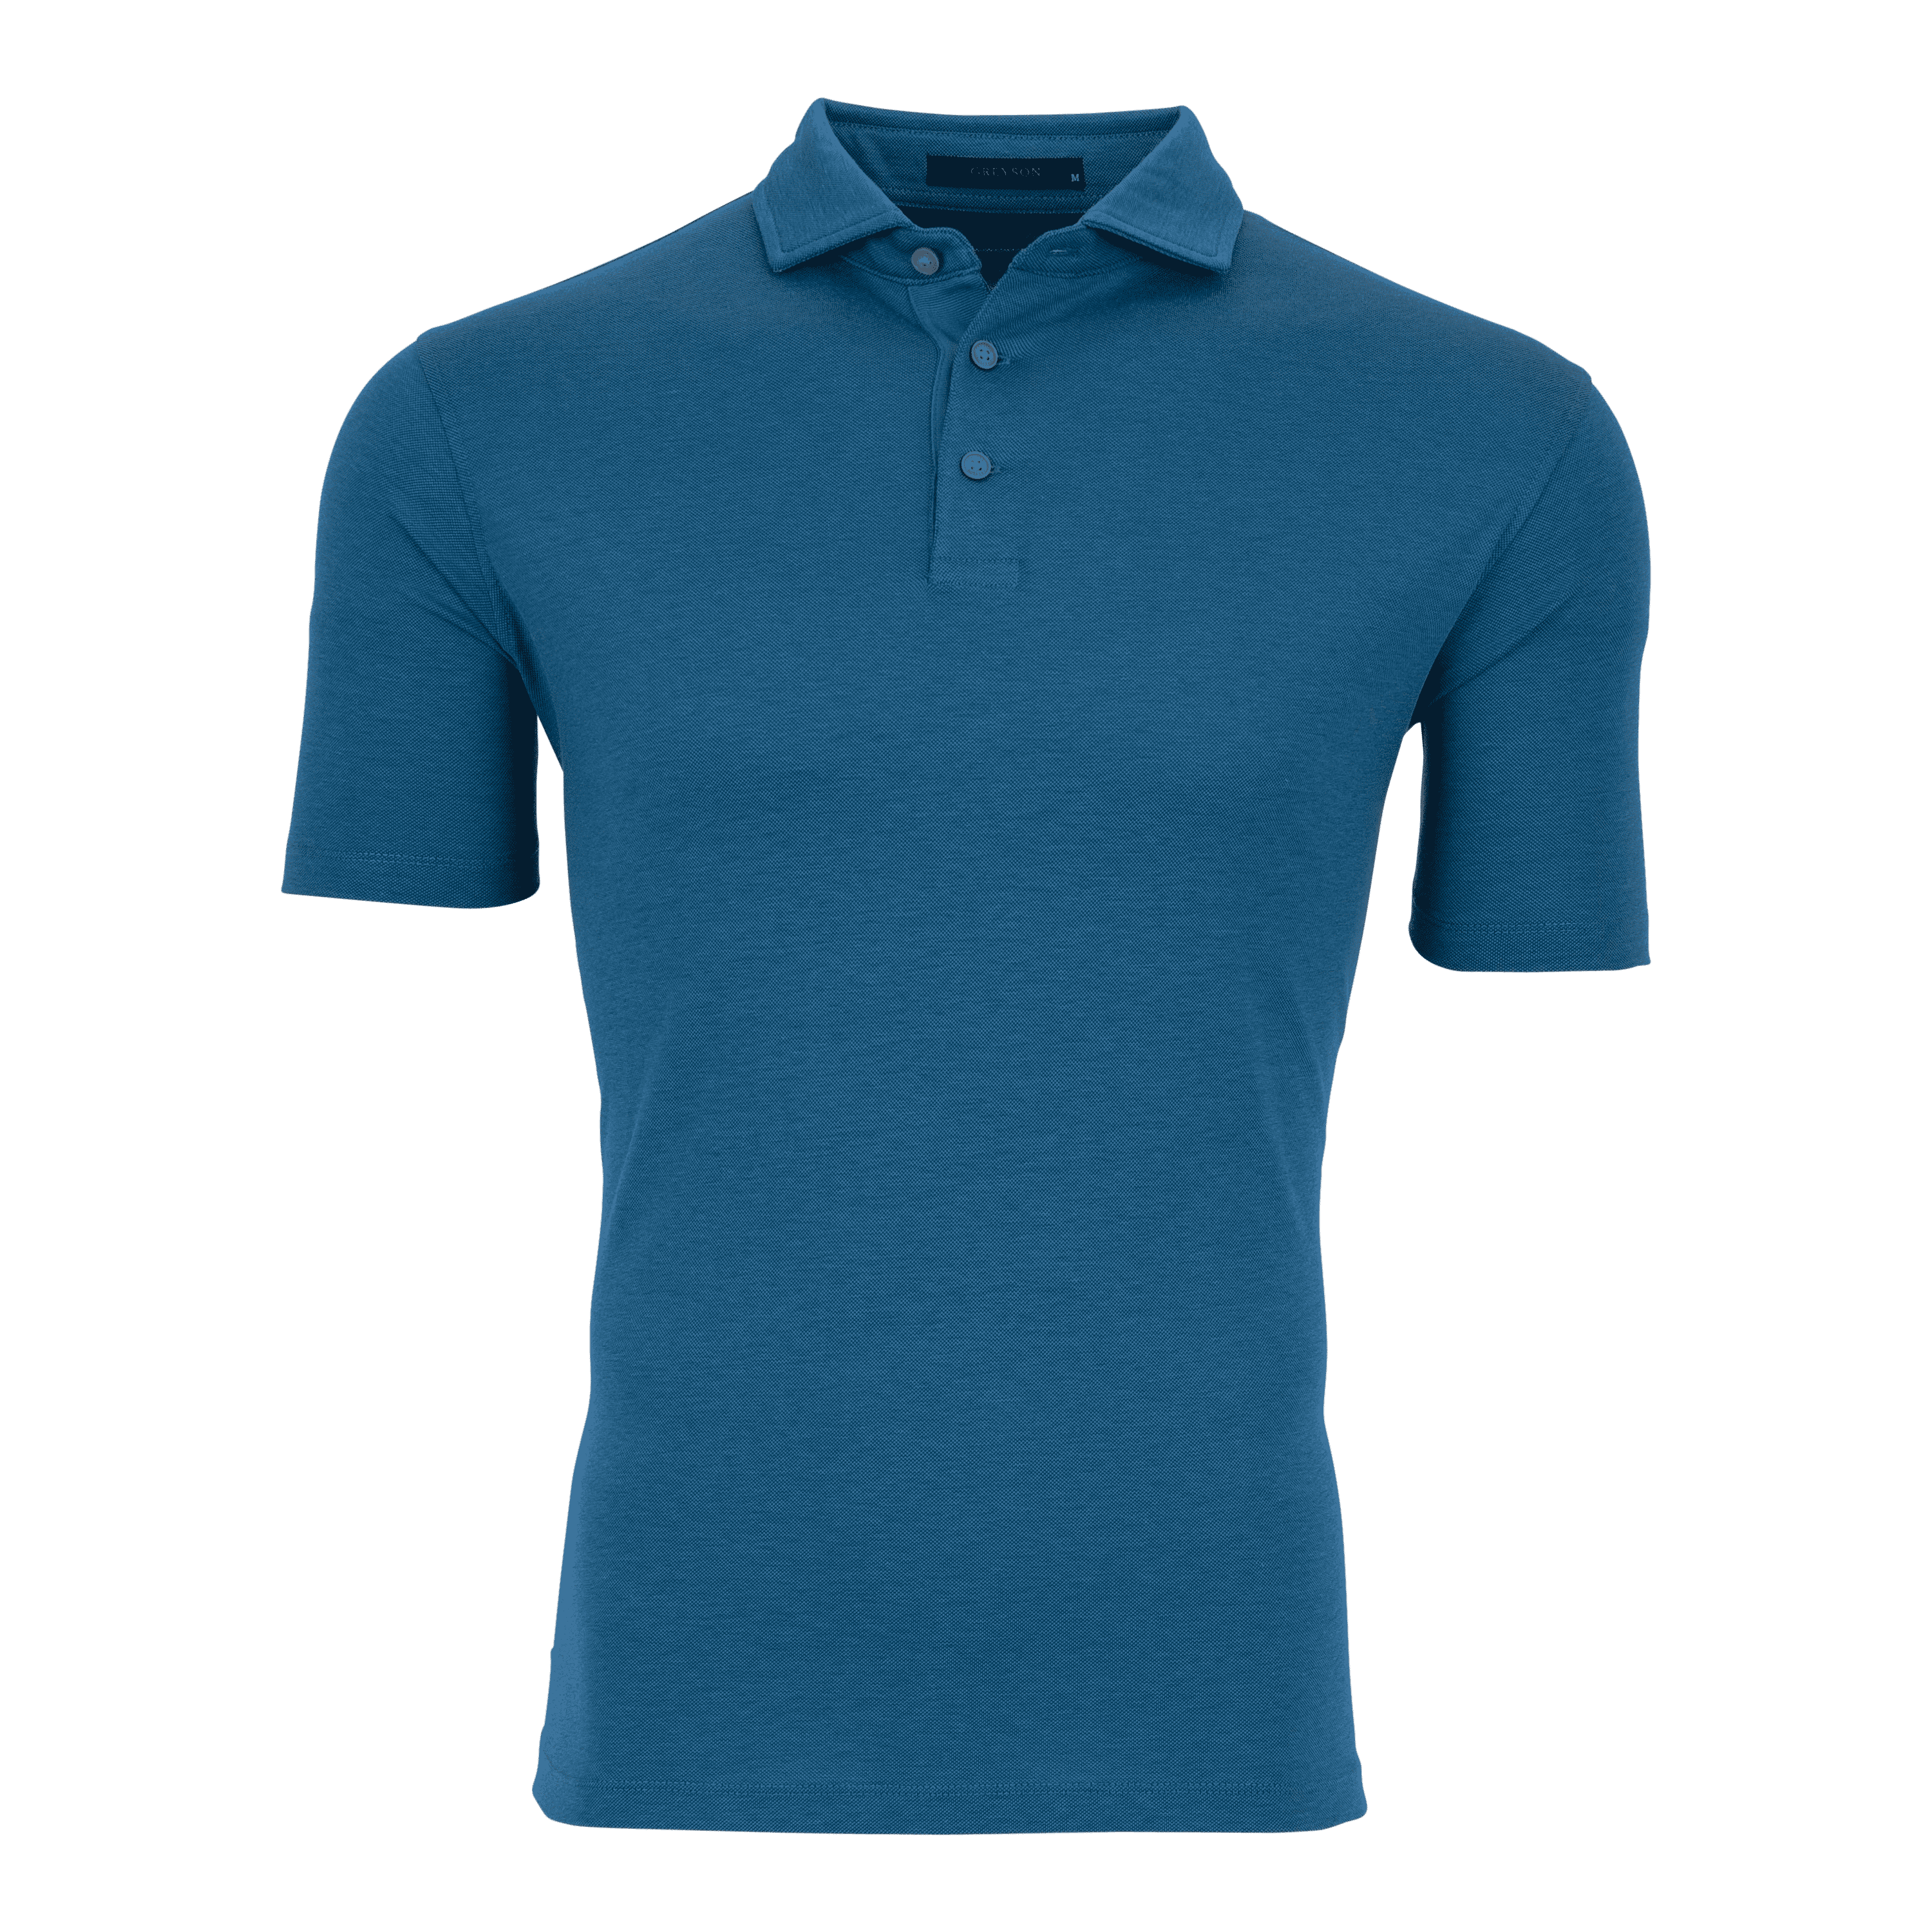 Omaha Polo – Greyson Clothiers